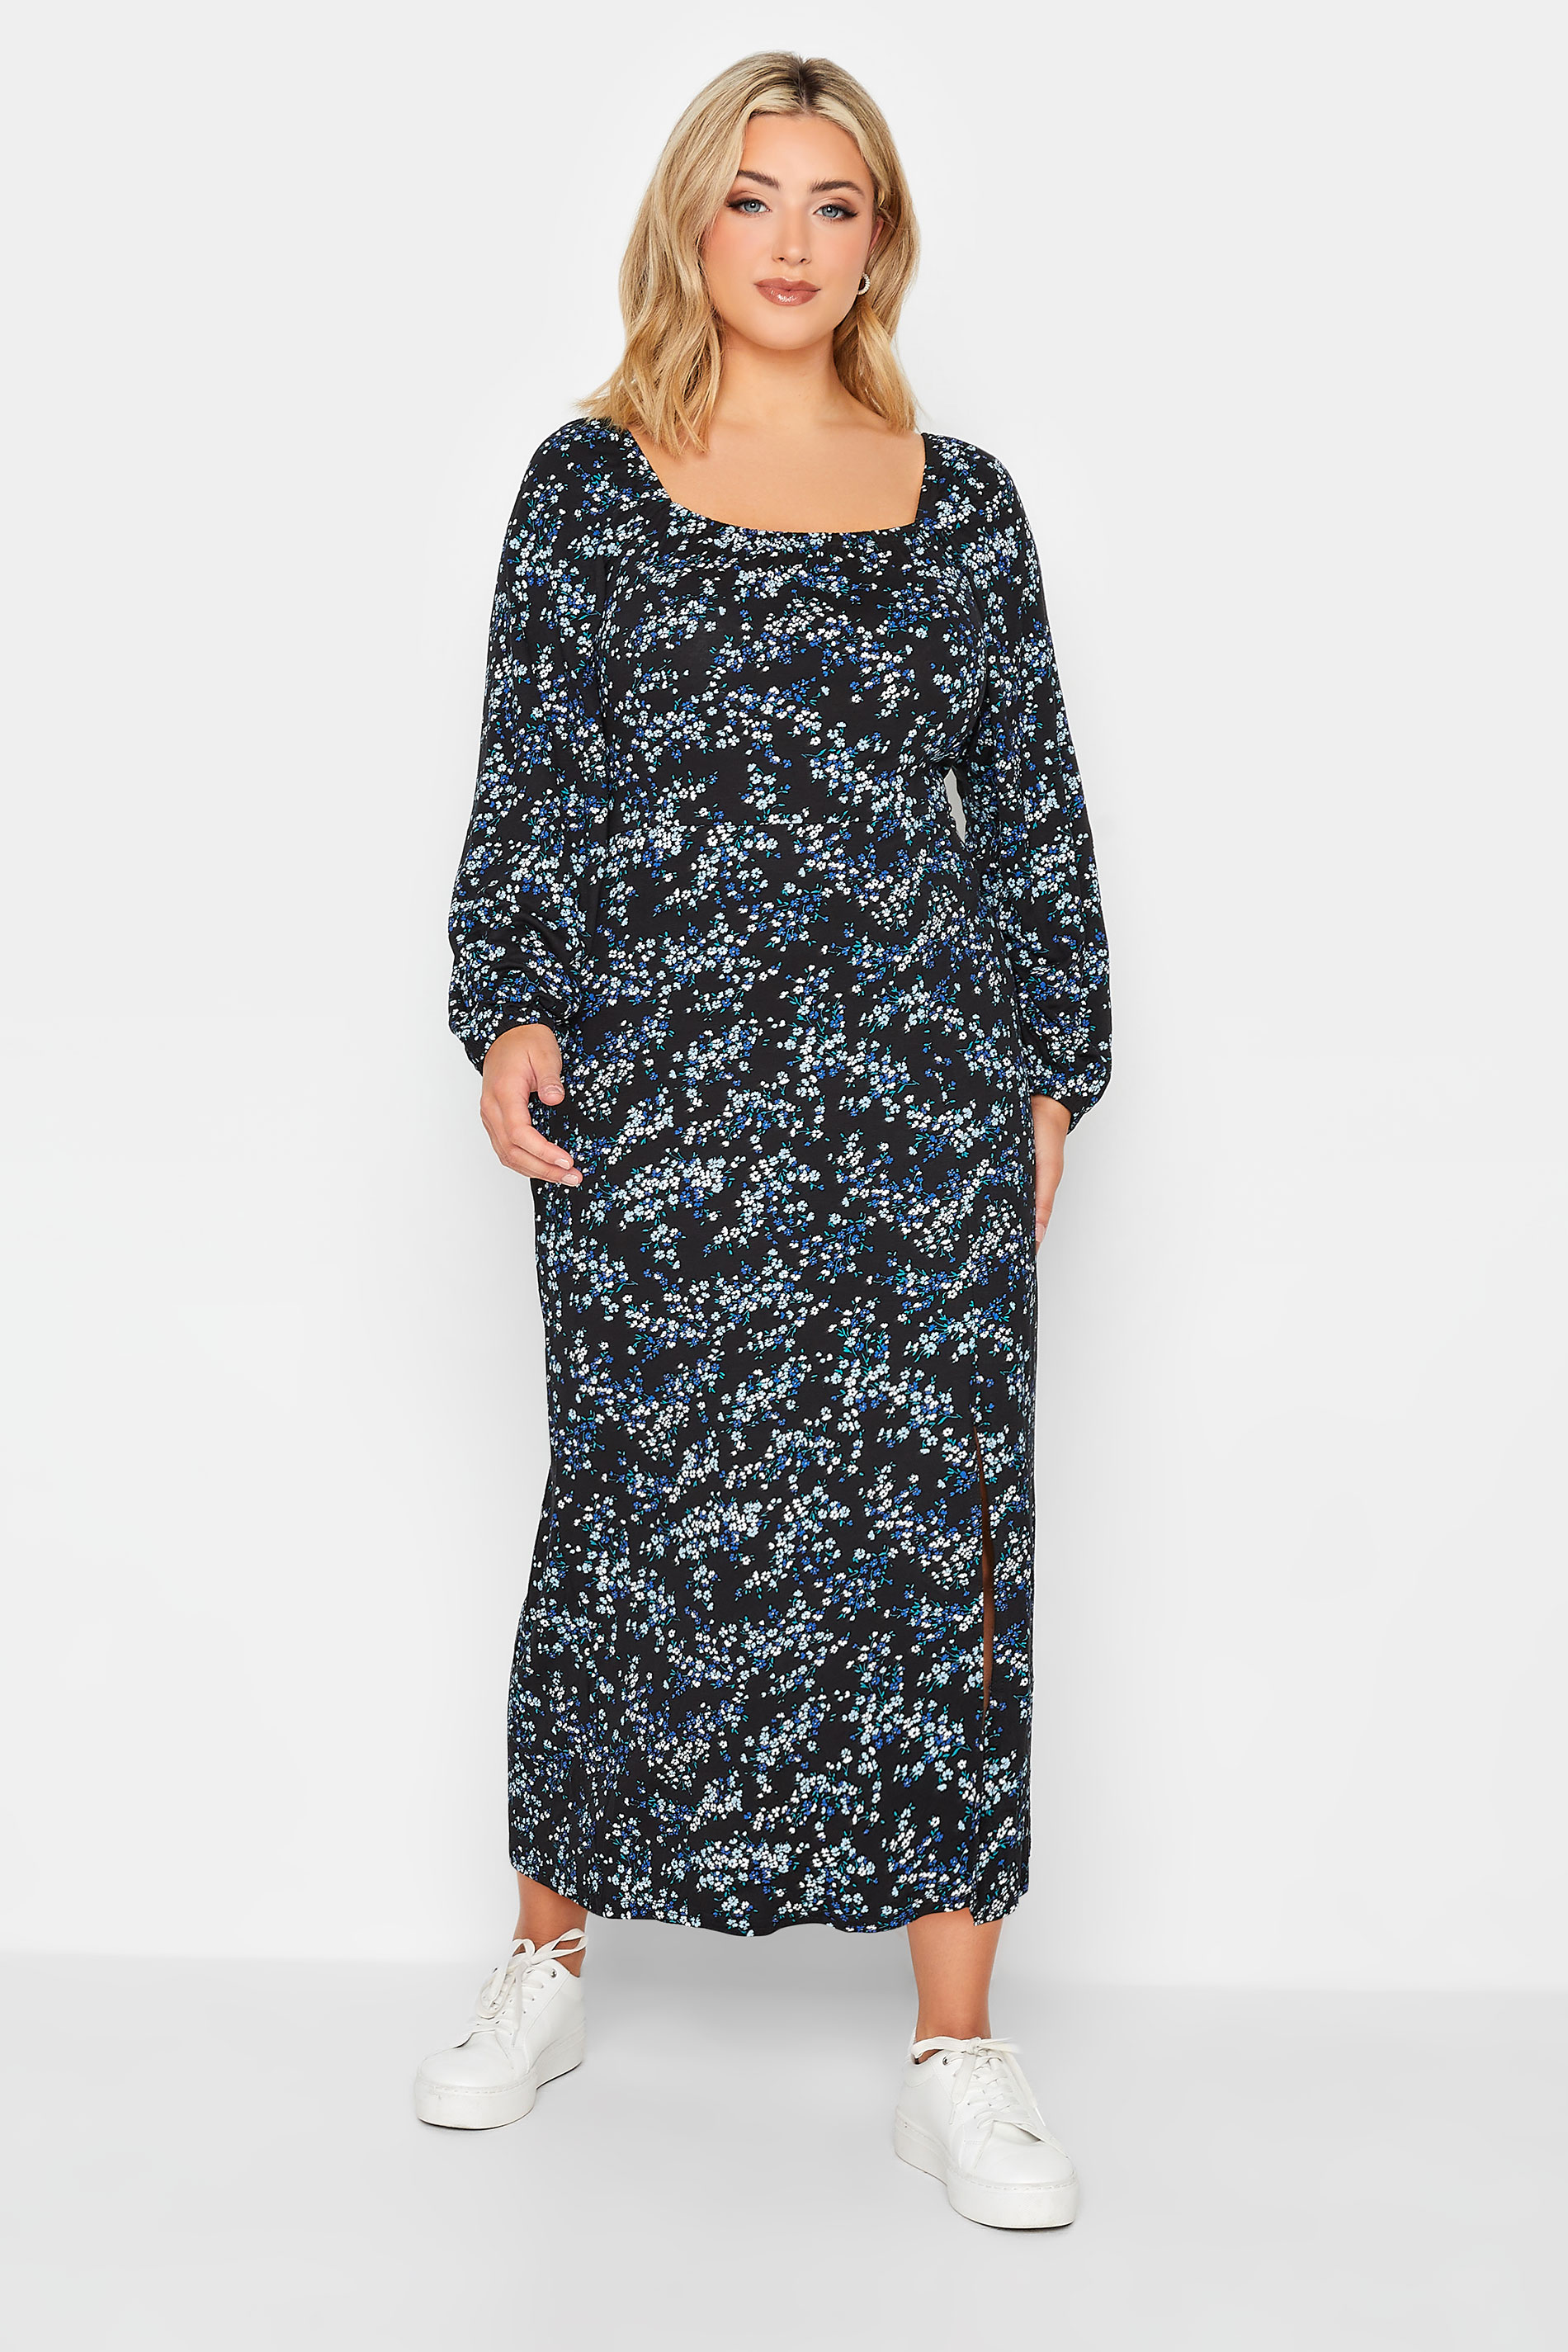 YOURS PETITE Plus Size Black & Blue Ditsy Print Milkmaid Midi Dress | Yours Clothing 3